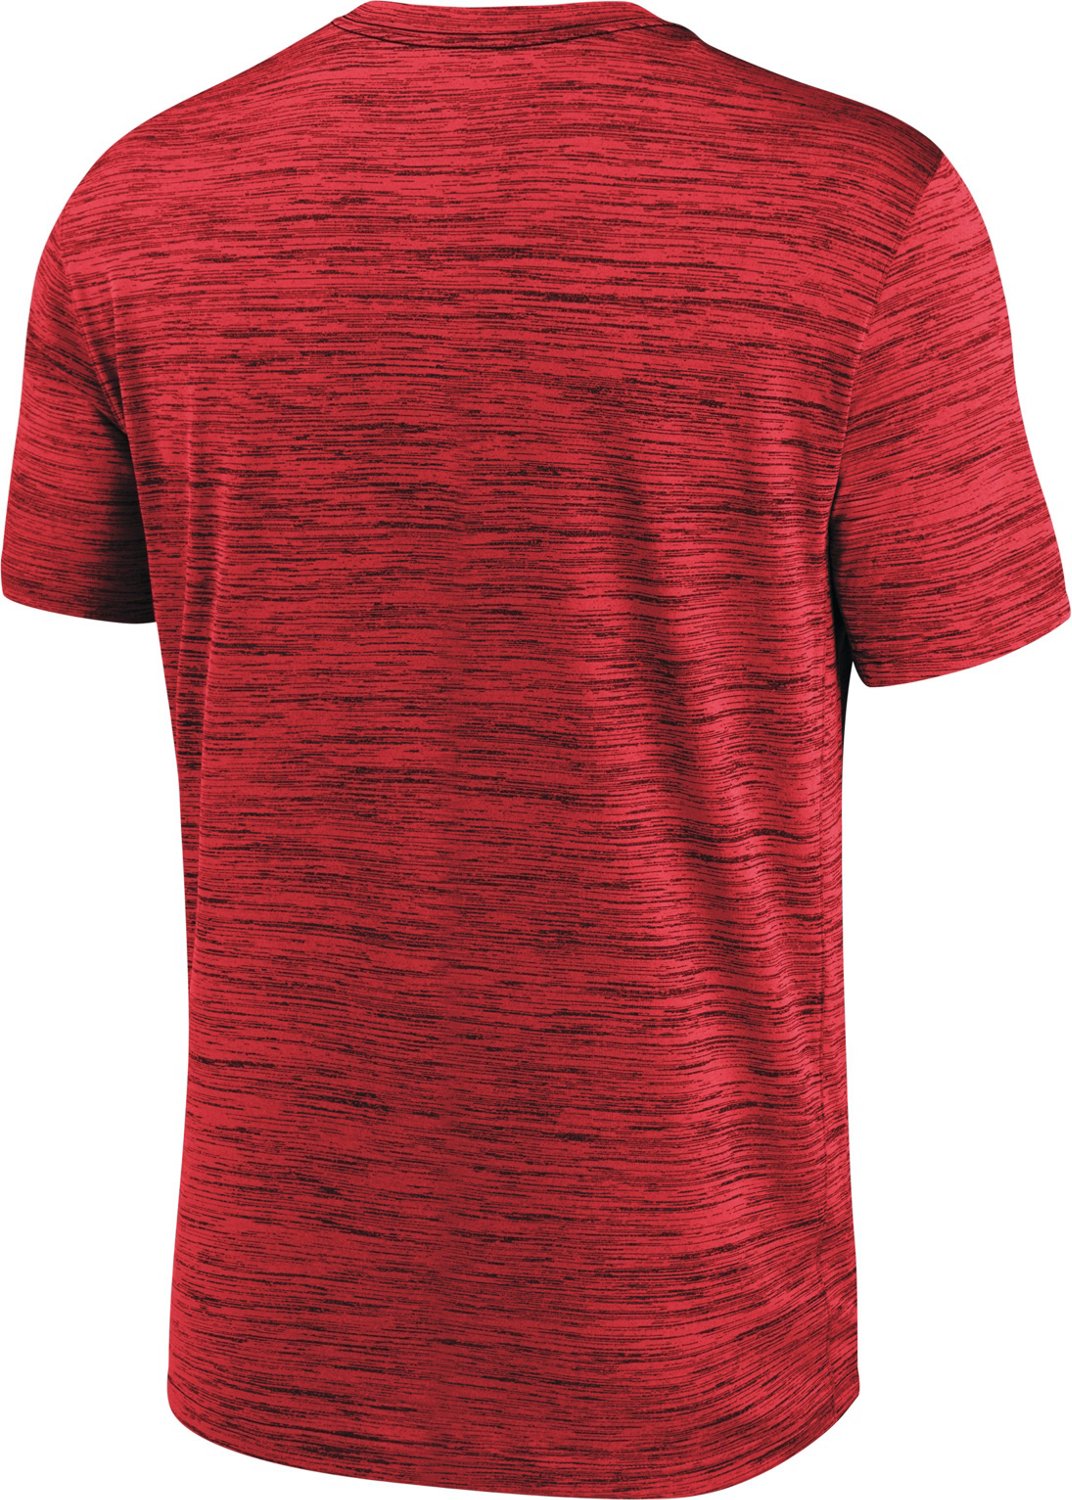 Texas Rangers Nike Dri-fit T-shirt MLB Baseball Grey Sz Small Authentic  Perfect